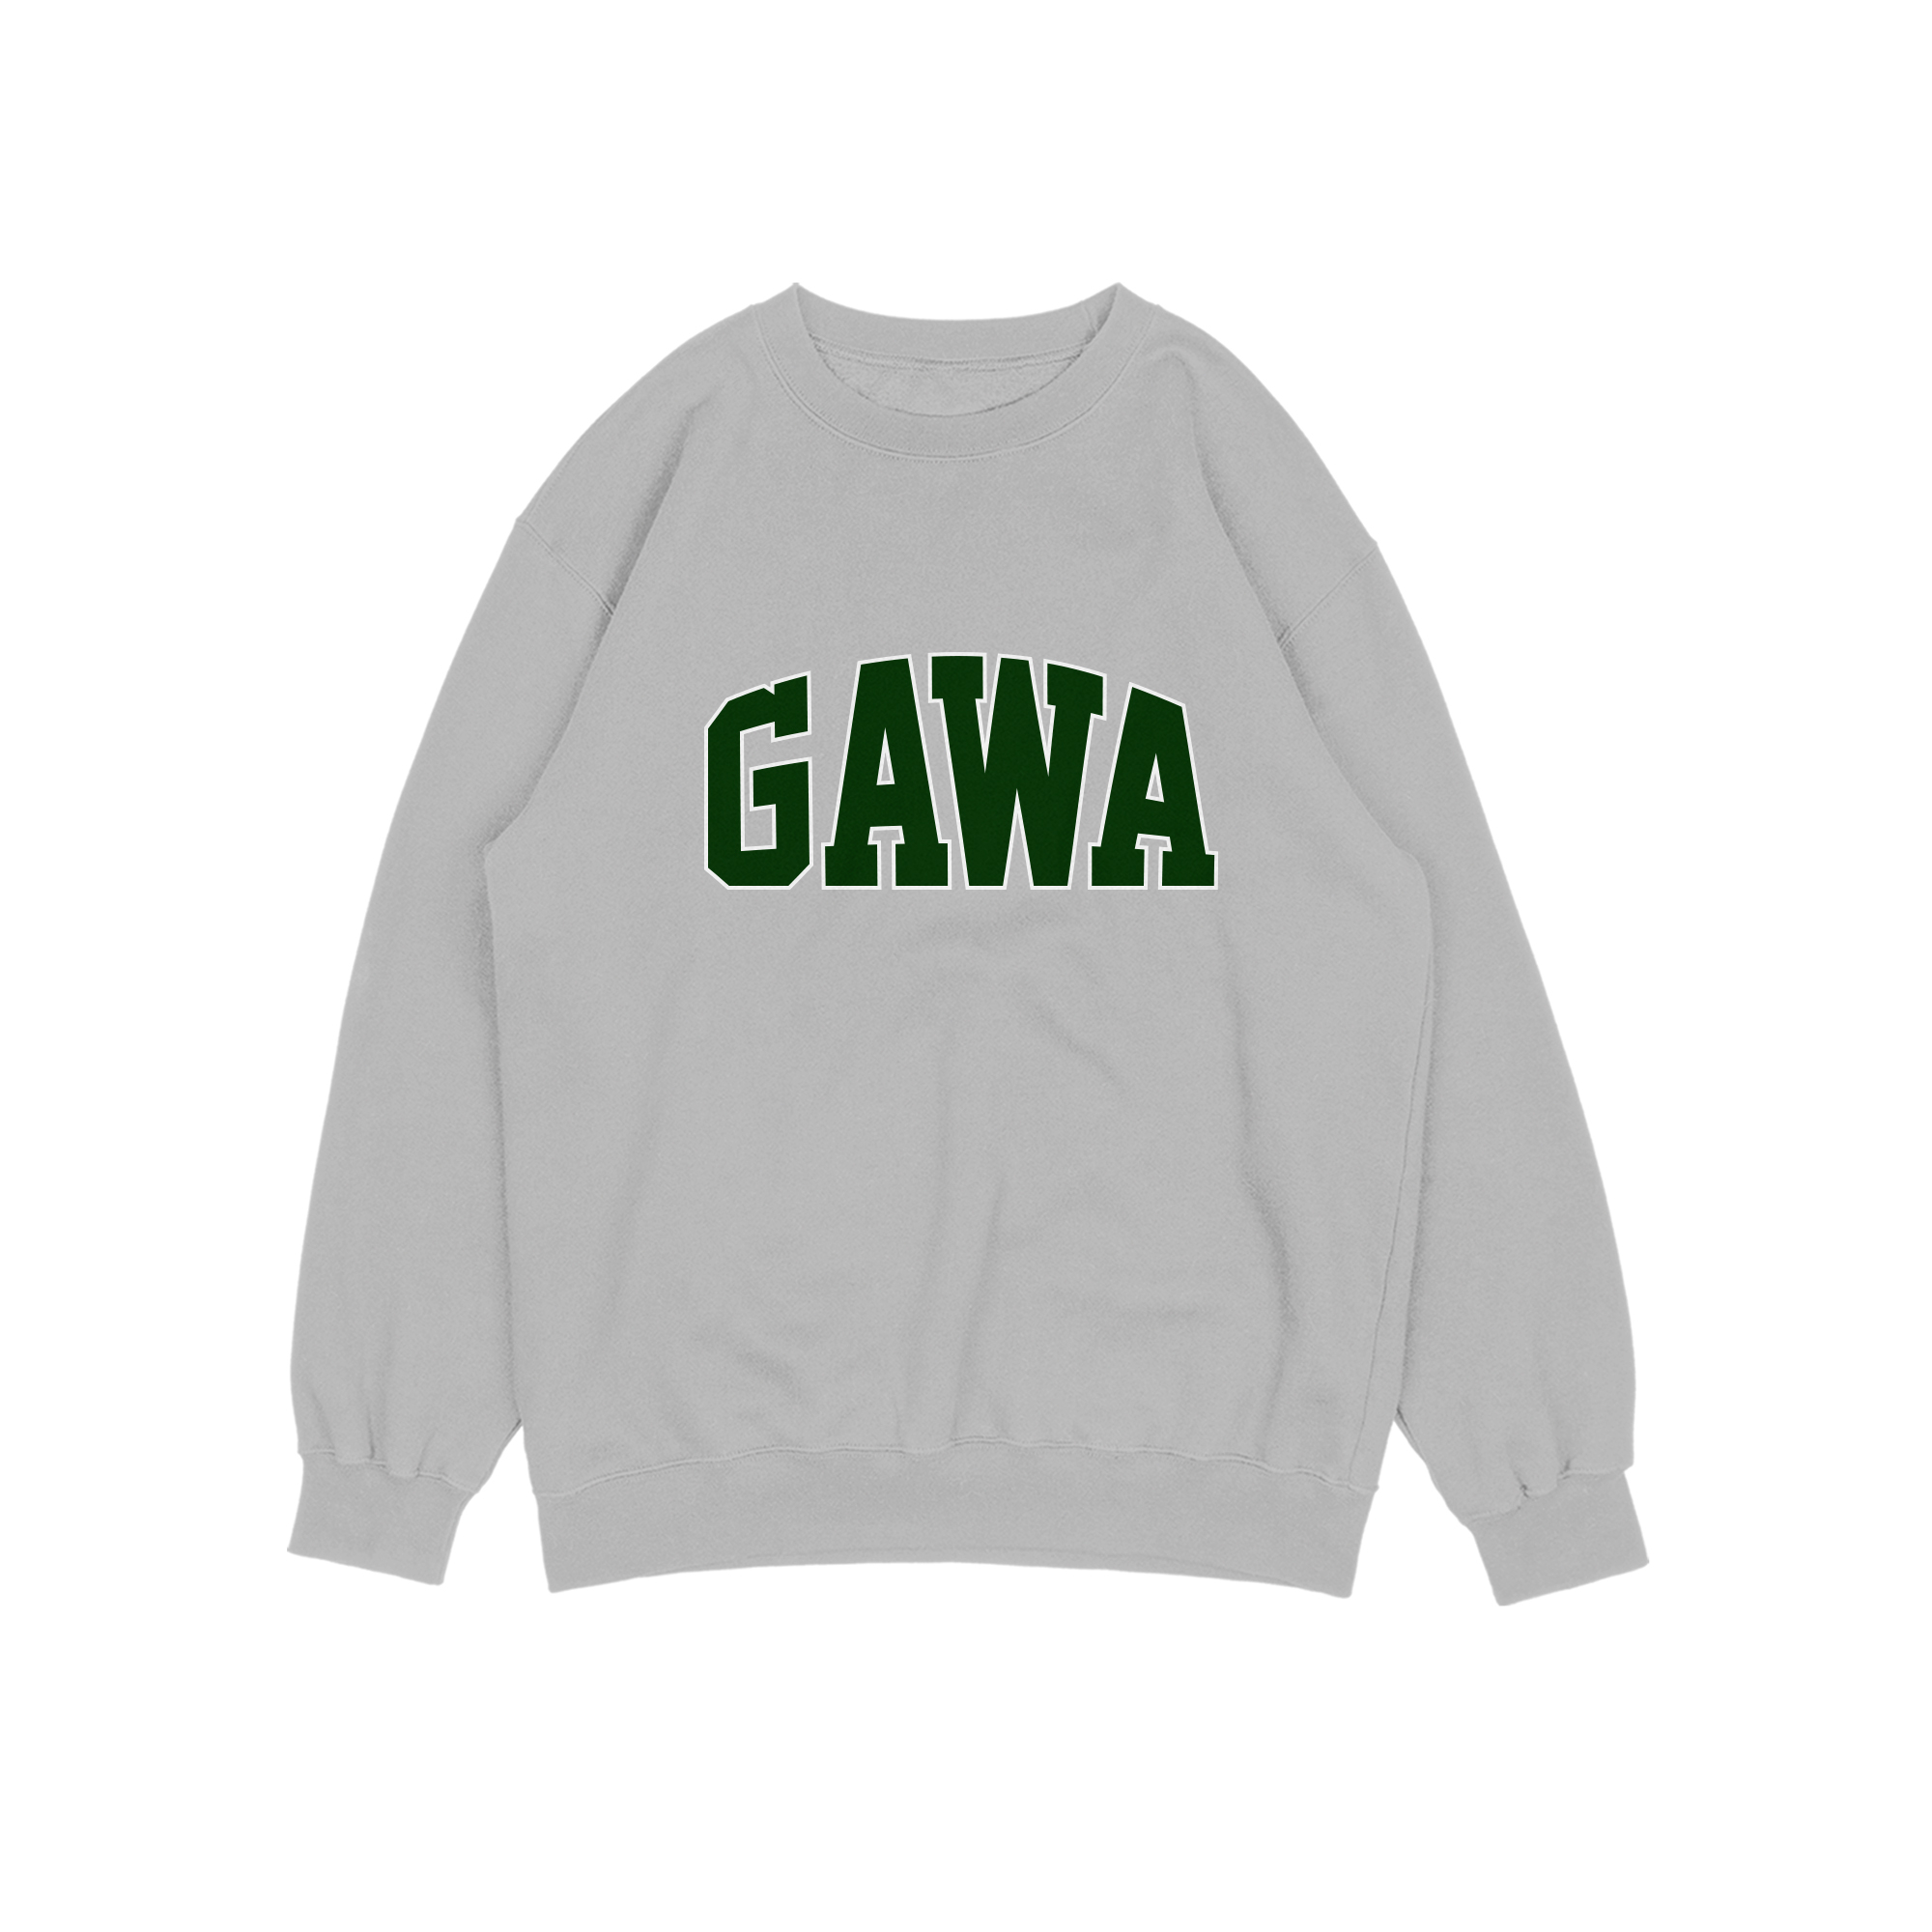 GREEN LOGO GAWA SWEATER CREWNECK PRIA WANITA Size M-XXL